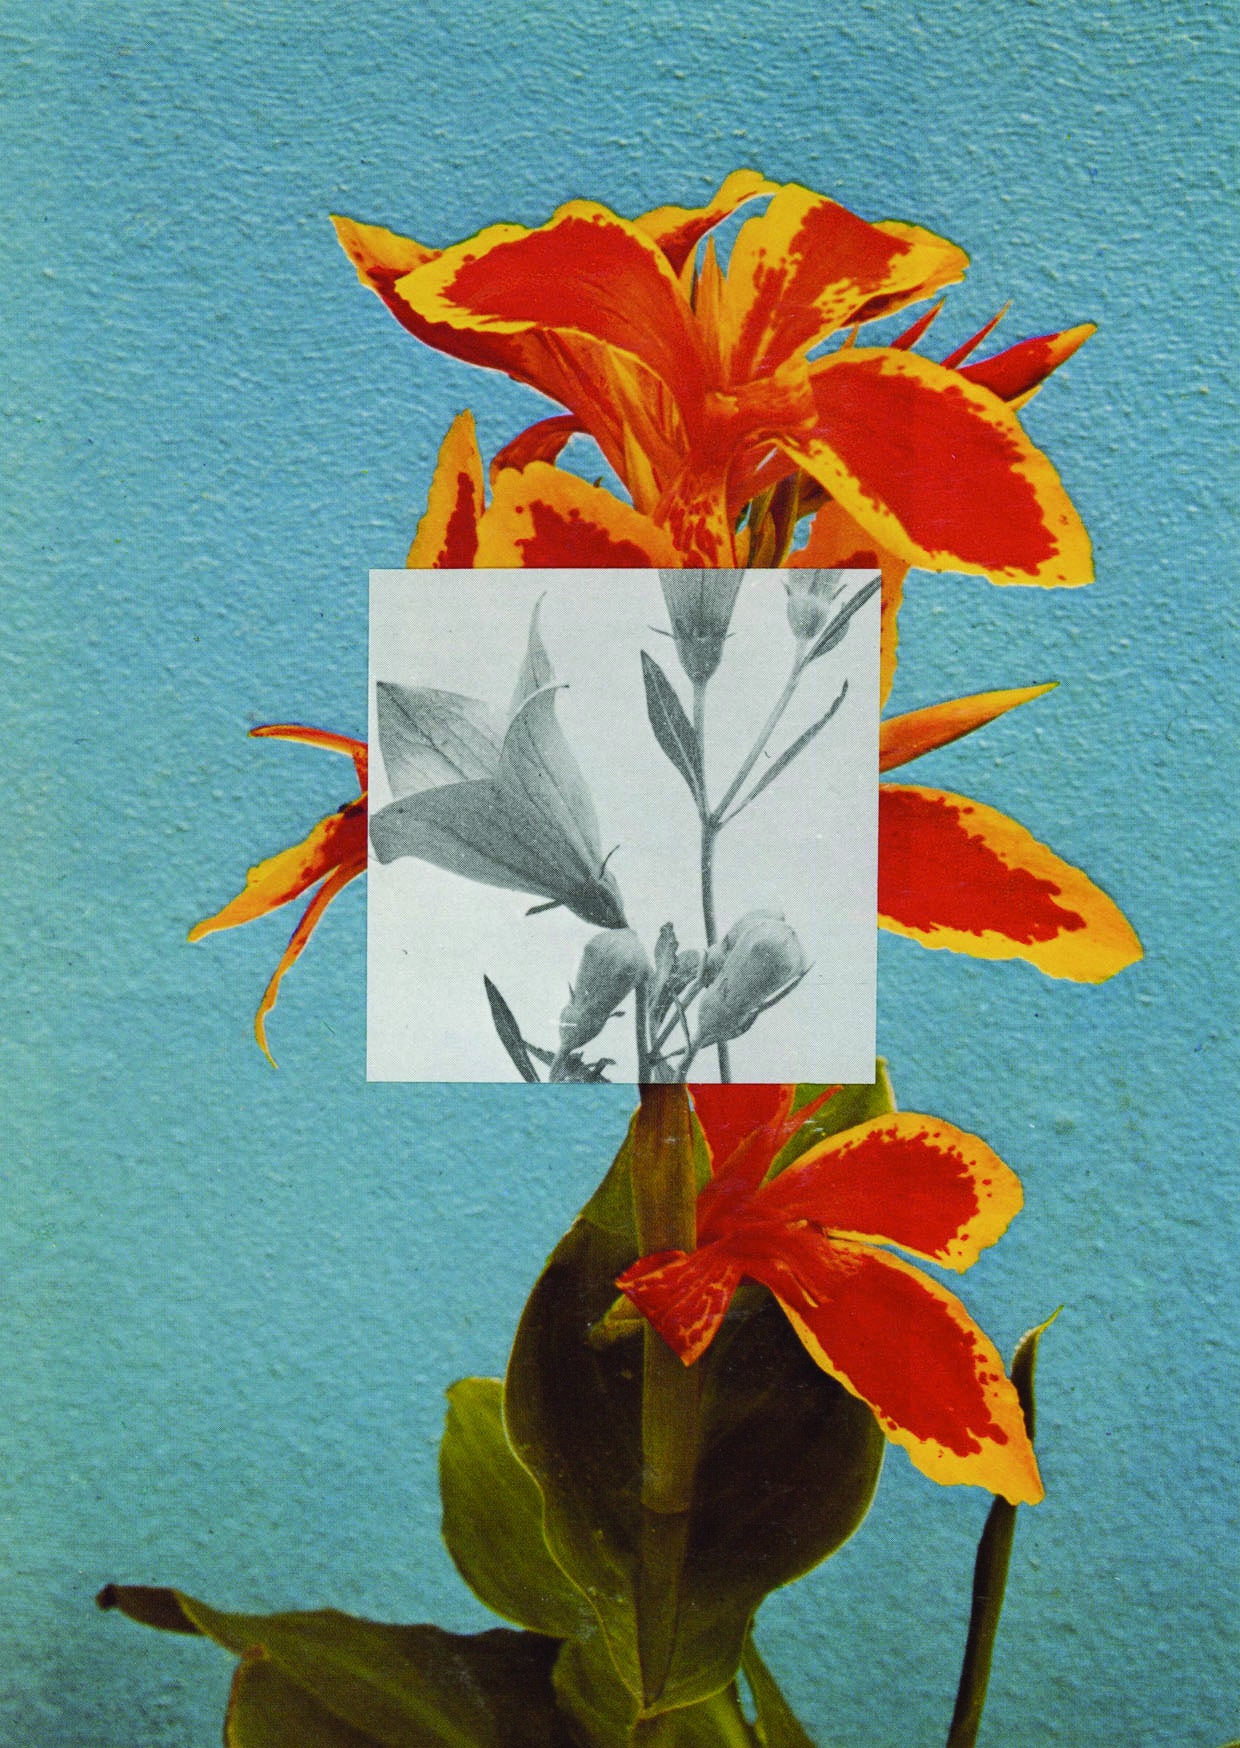 Postcard "Red Flower"